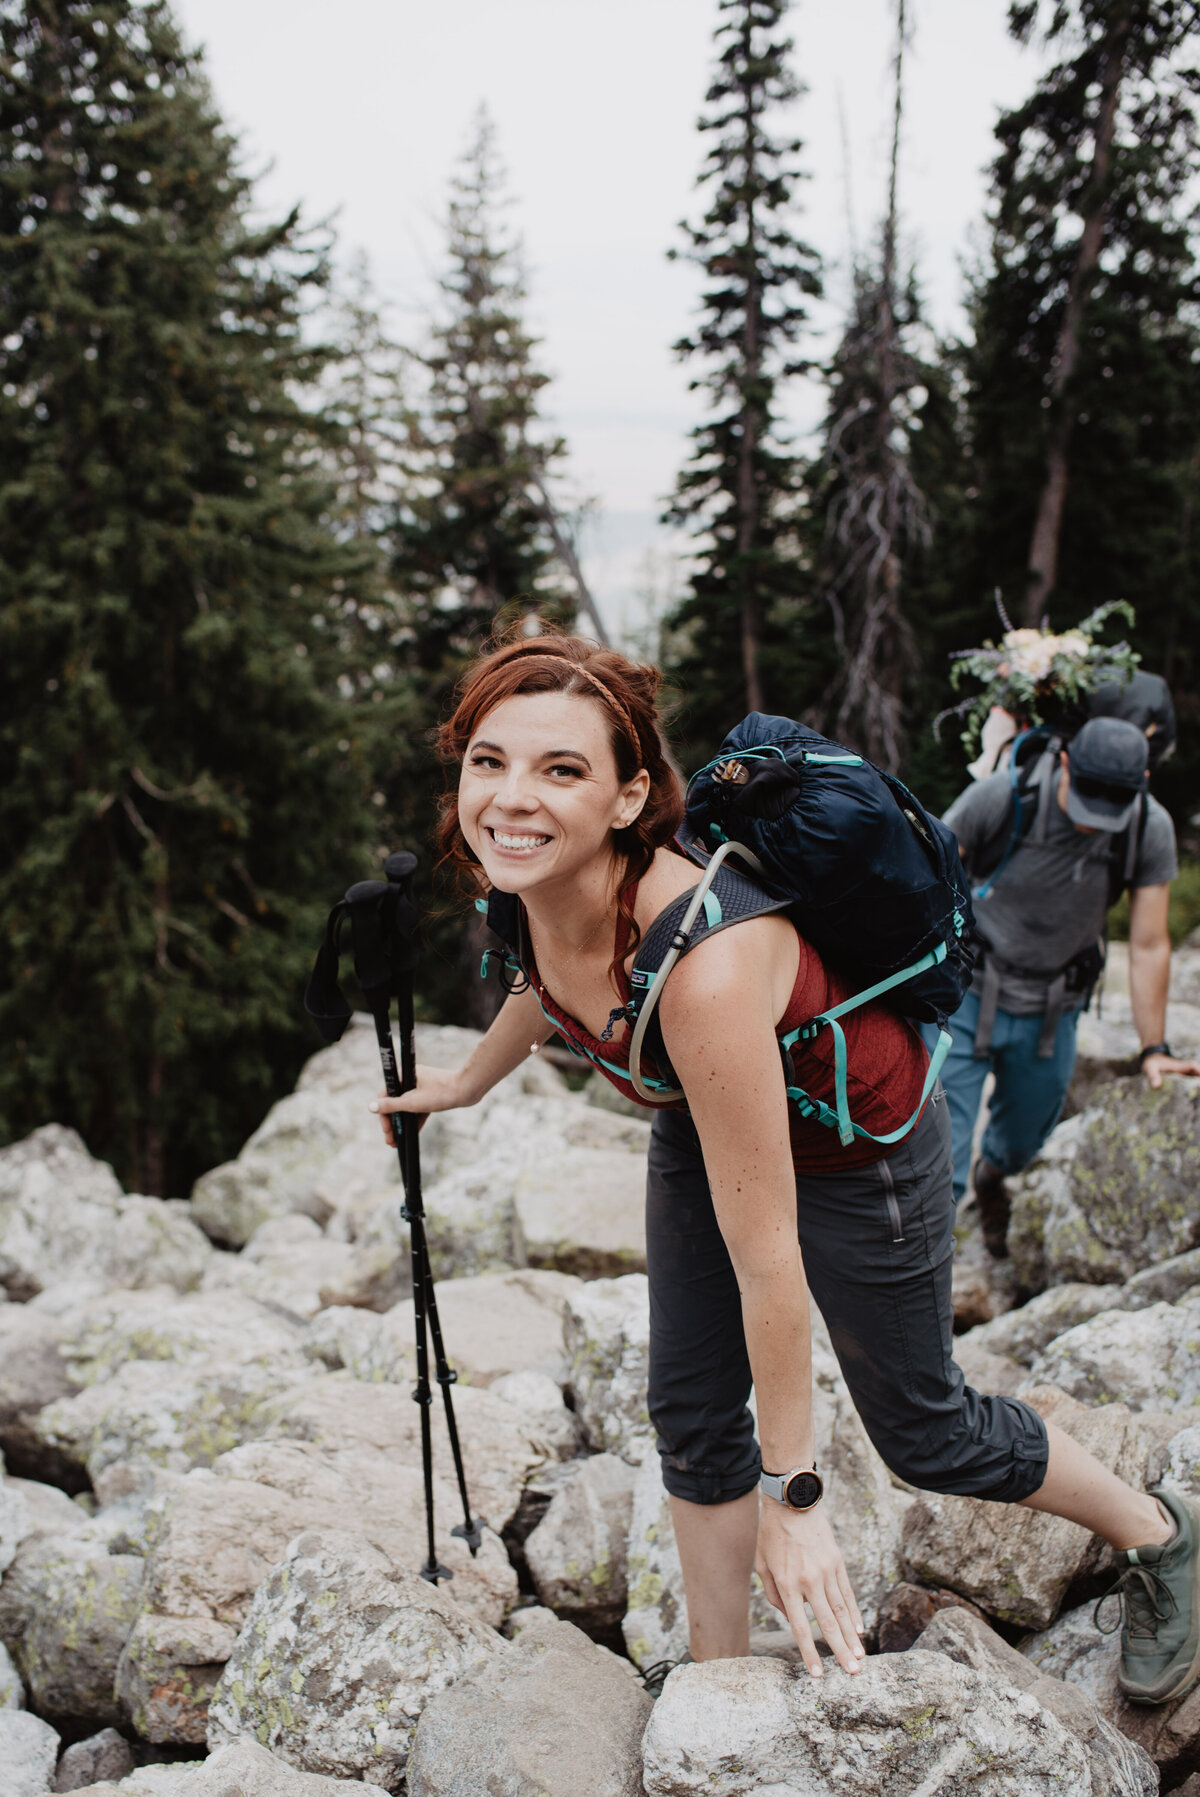 Jackson Hole photographers capture woman smiling during Grand Teton National Park hike